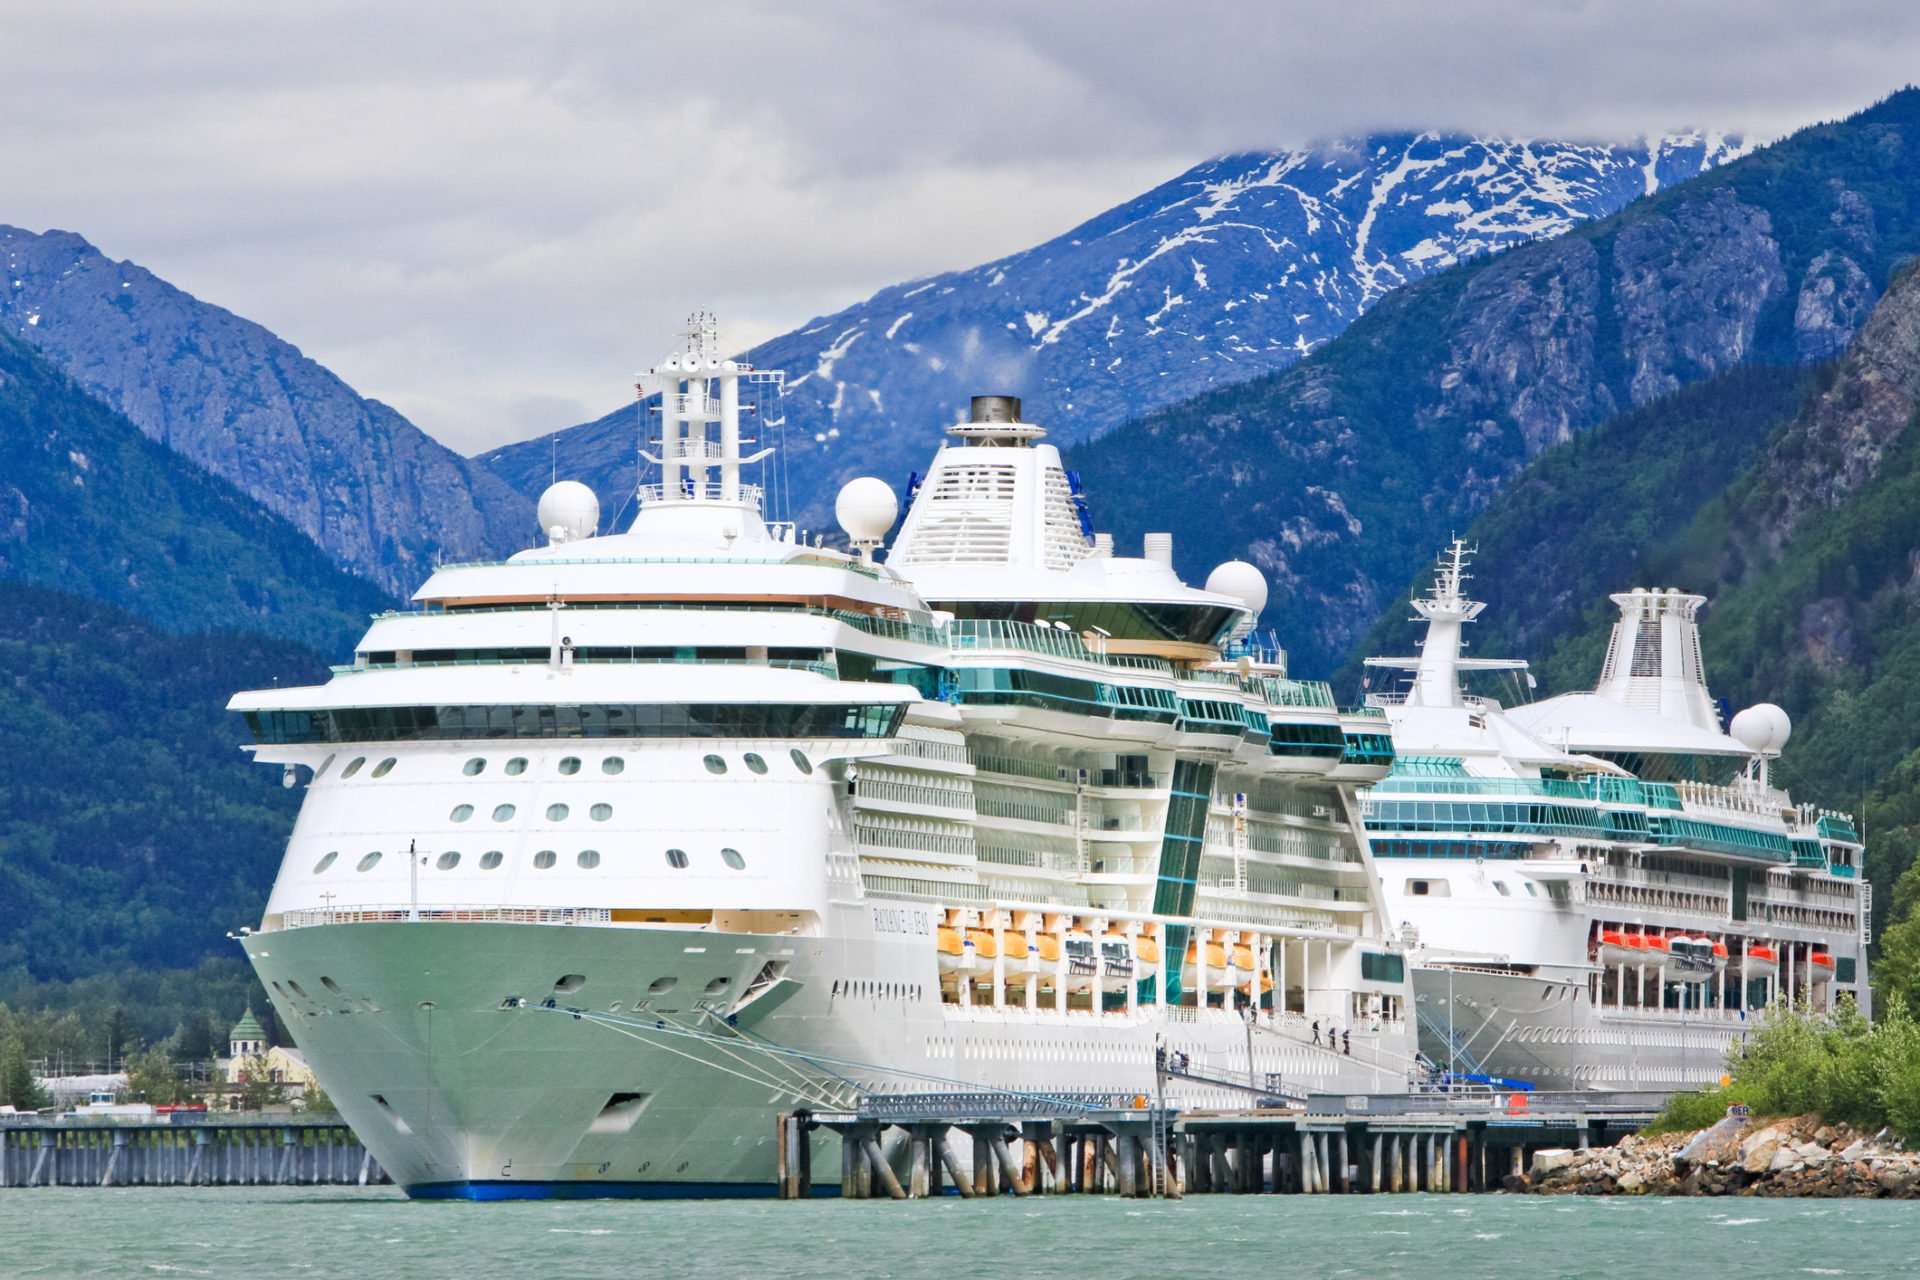 Alaskan Cruises